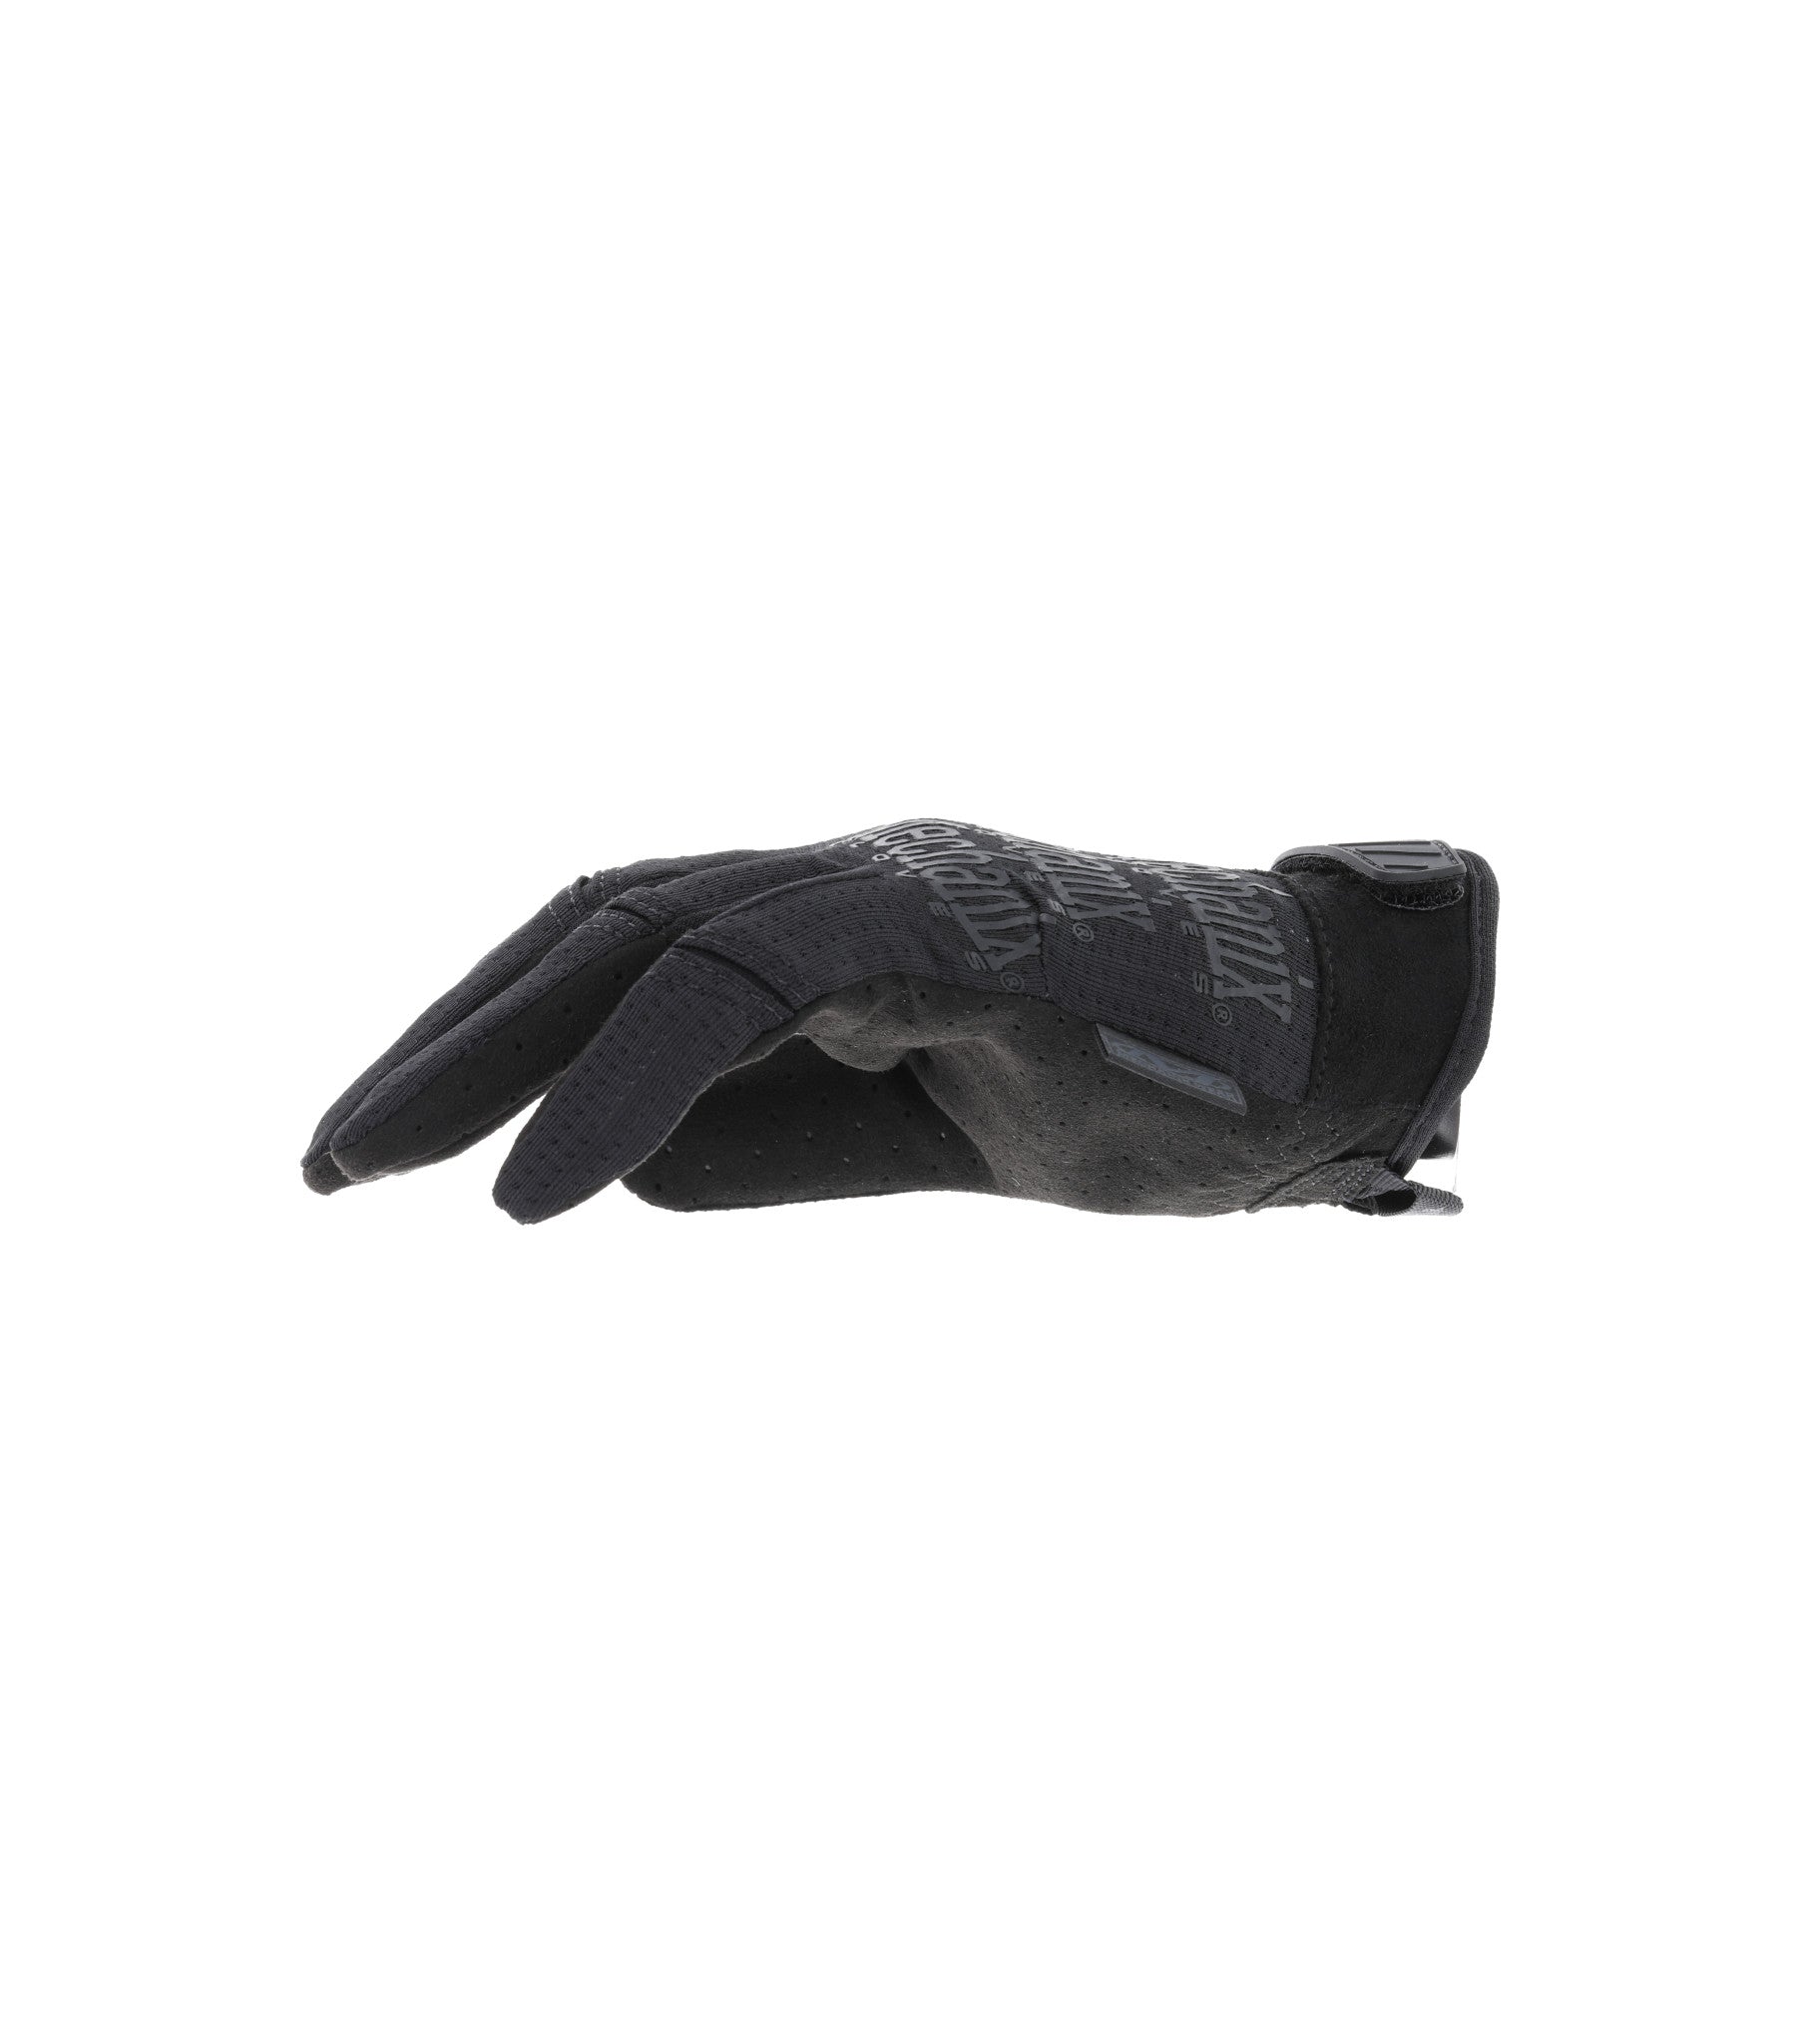 Mechanix Tactical Vent Gloves – Black